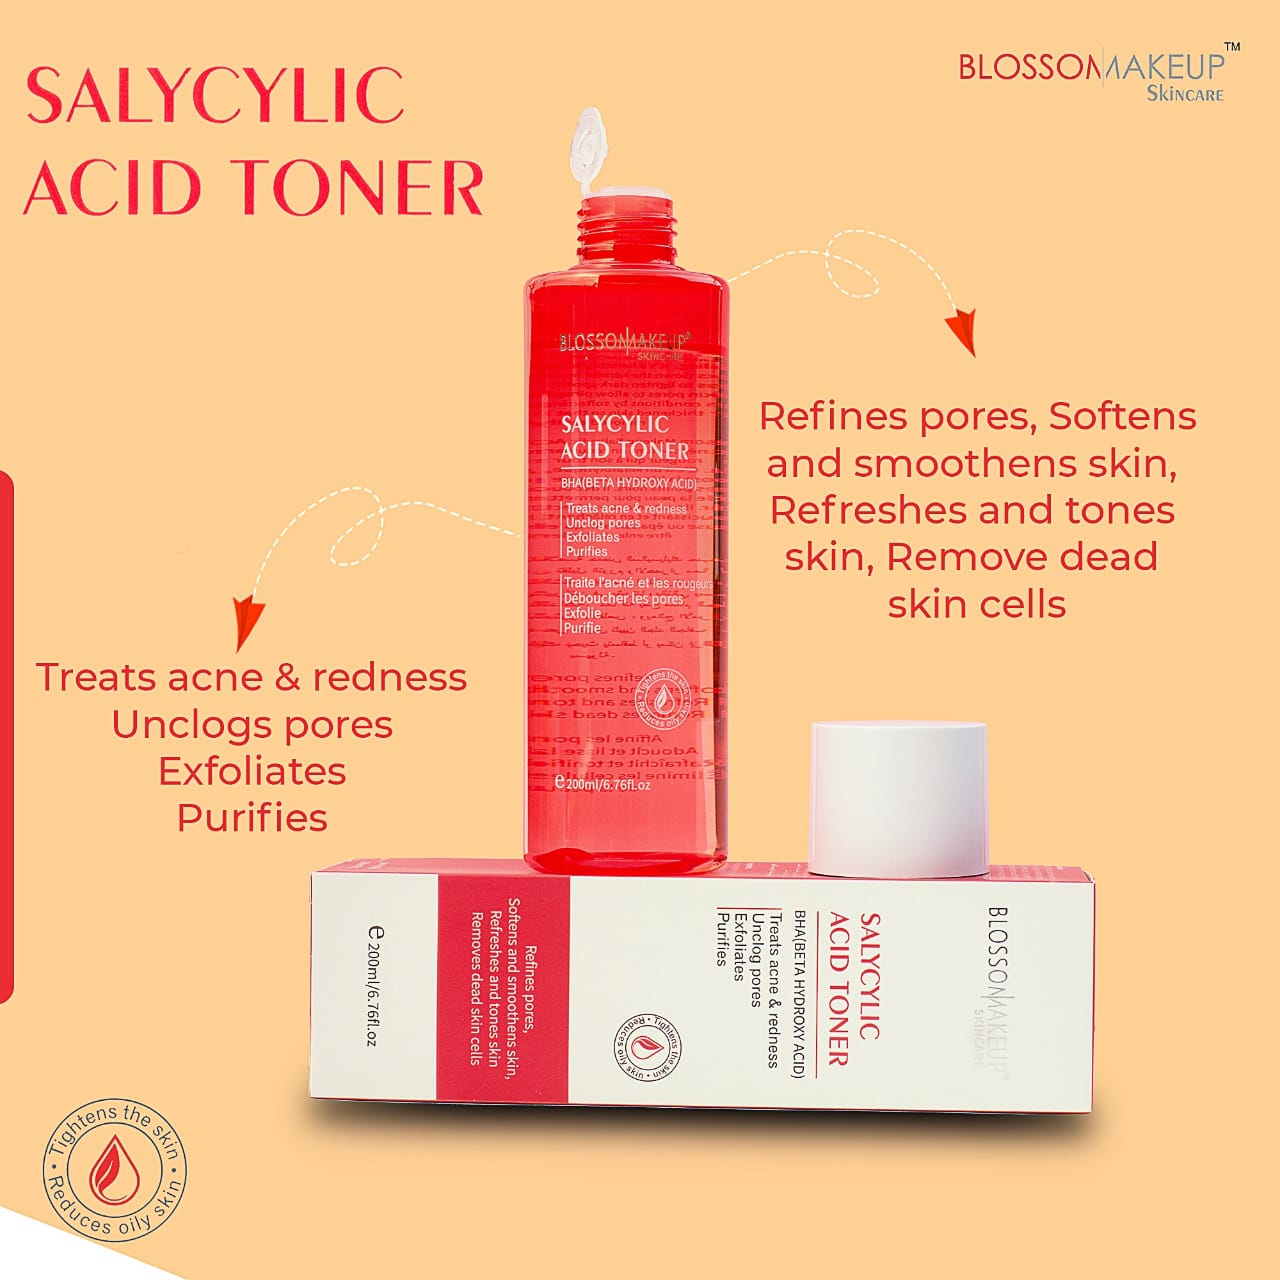 Blossom Makeup Salycylic Acid Toner